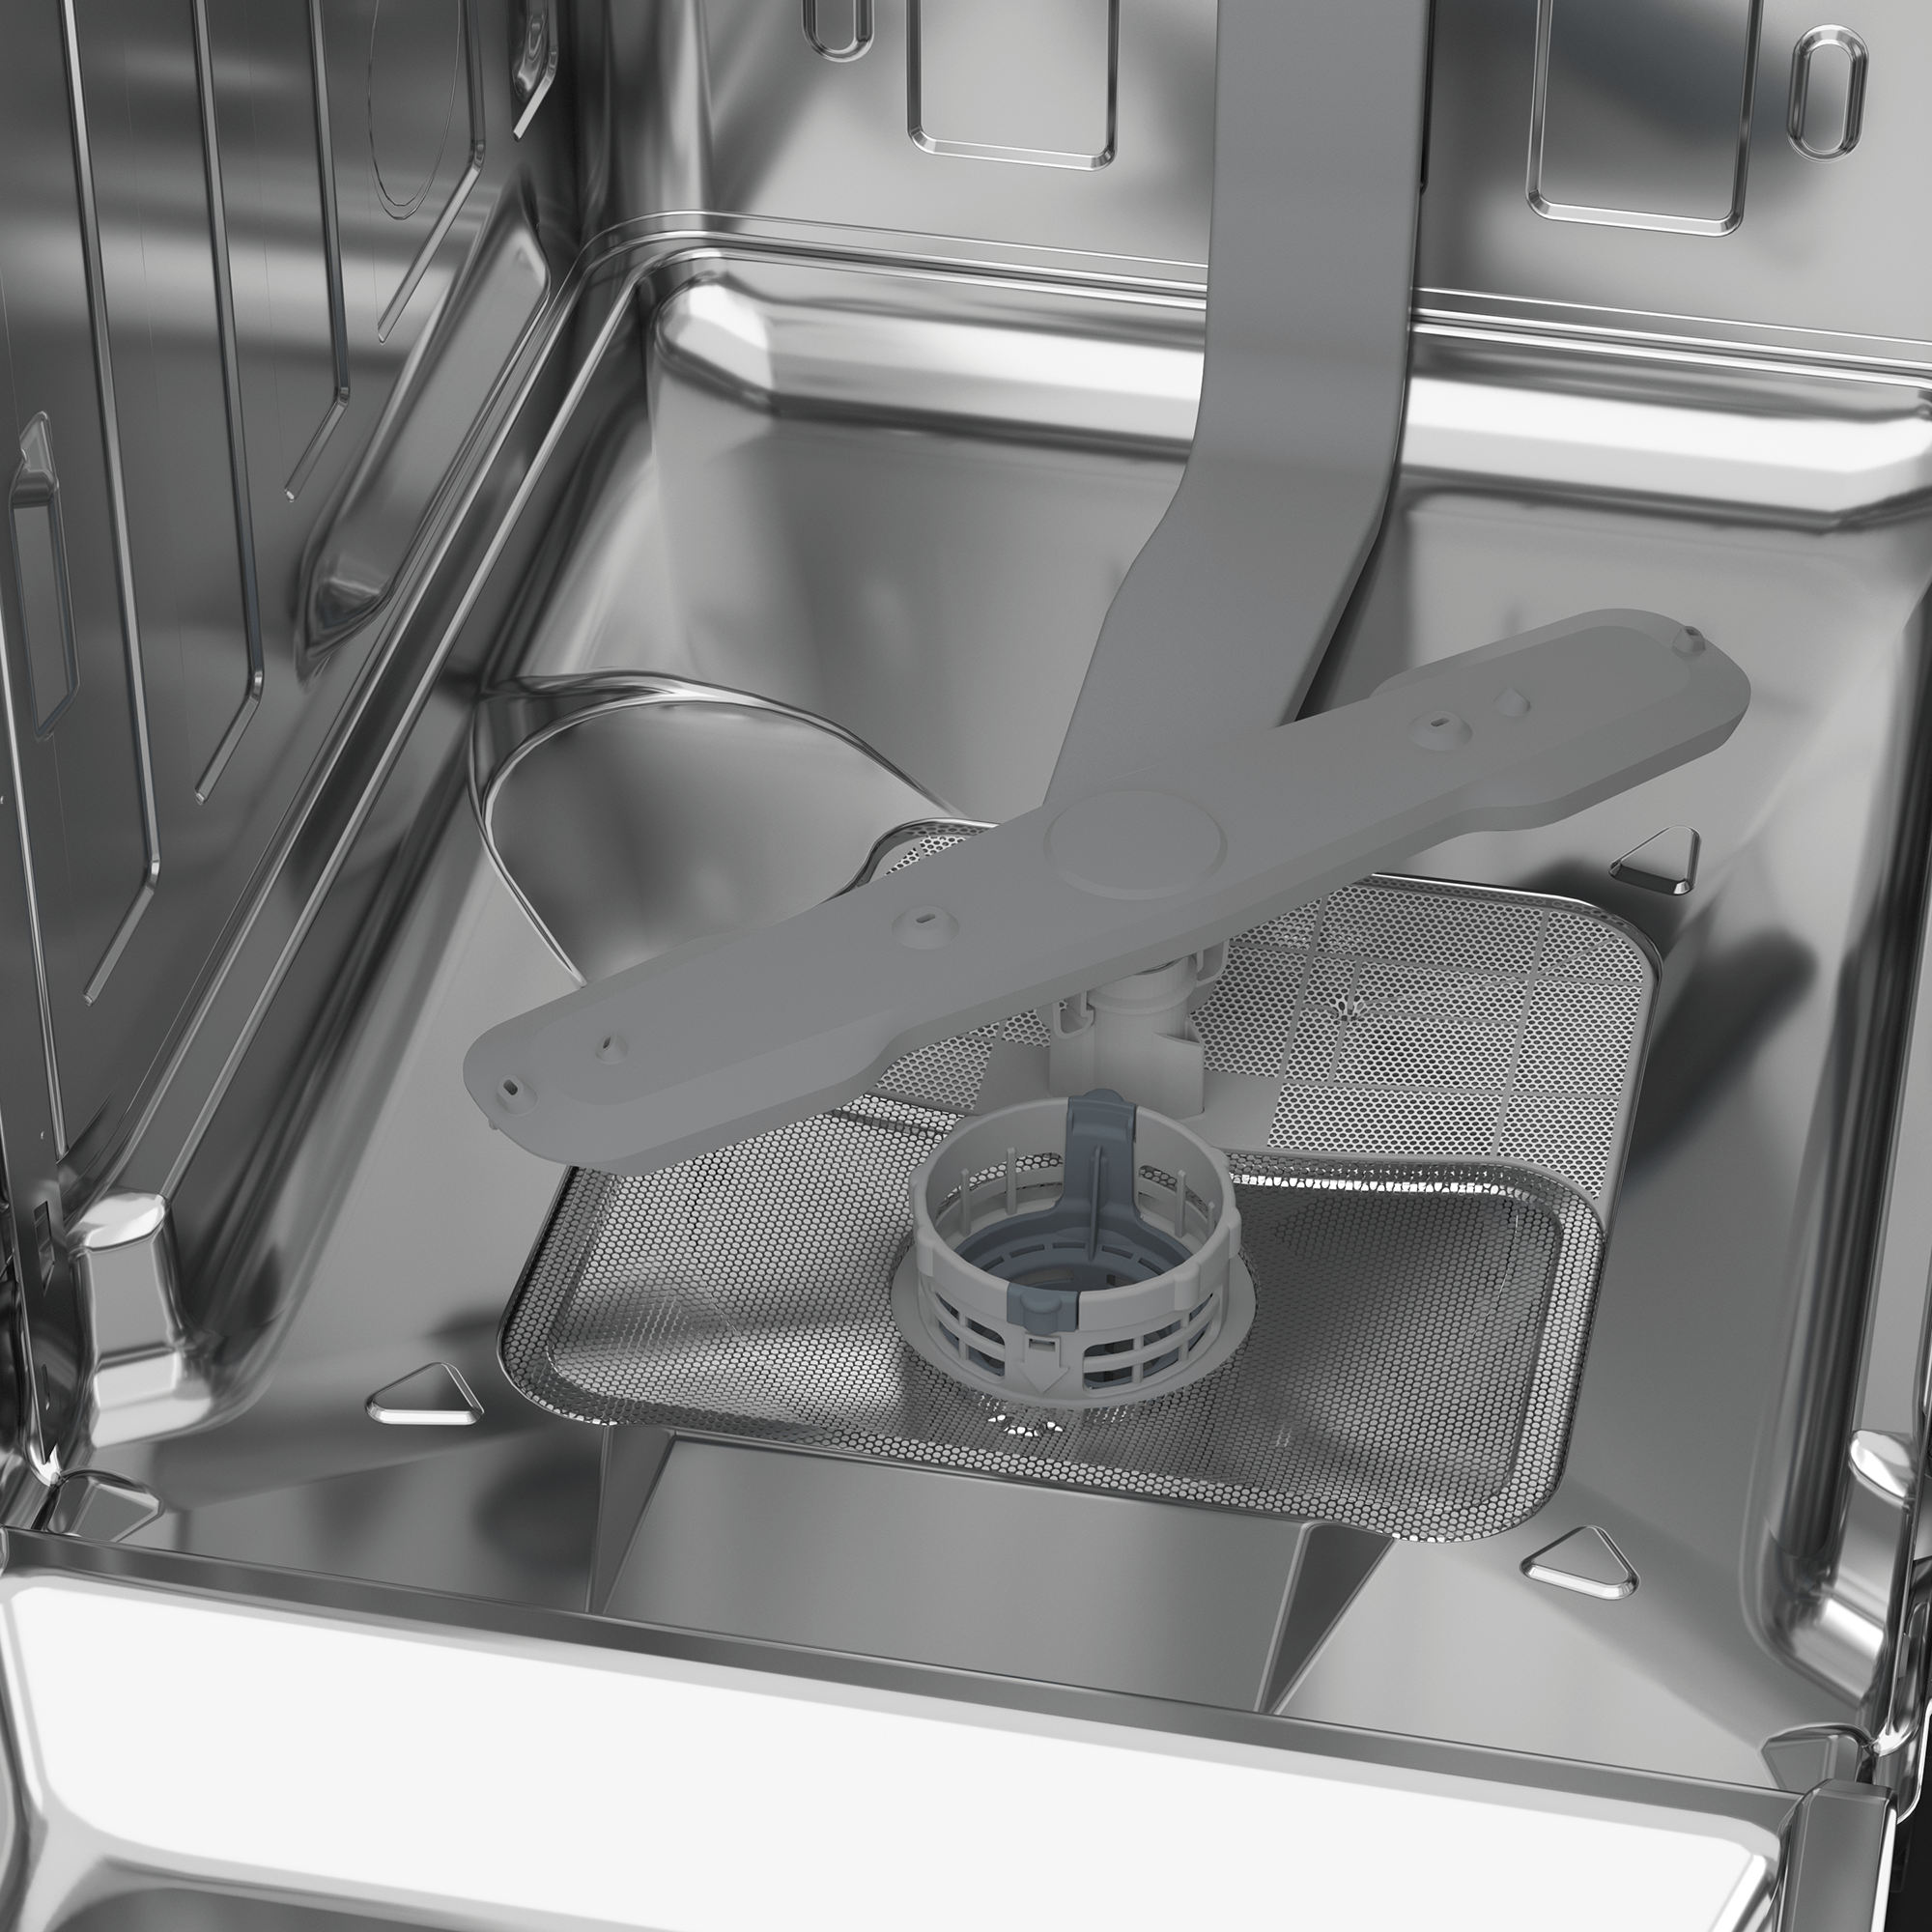 Beko Slim Size Dishwasher, 8 place settings, 48 dBa, Fully Integrated Panel Ready